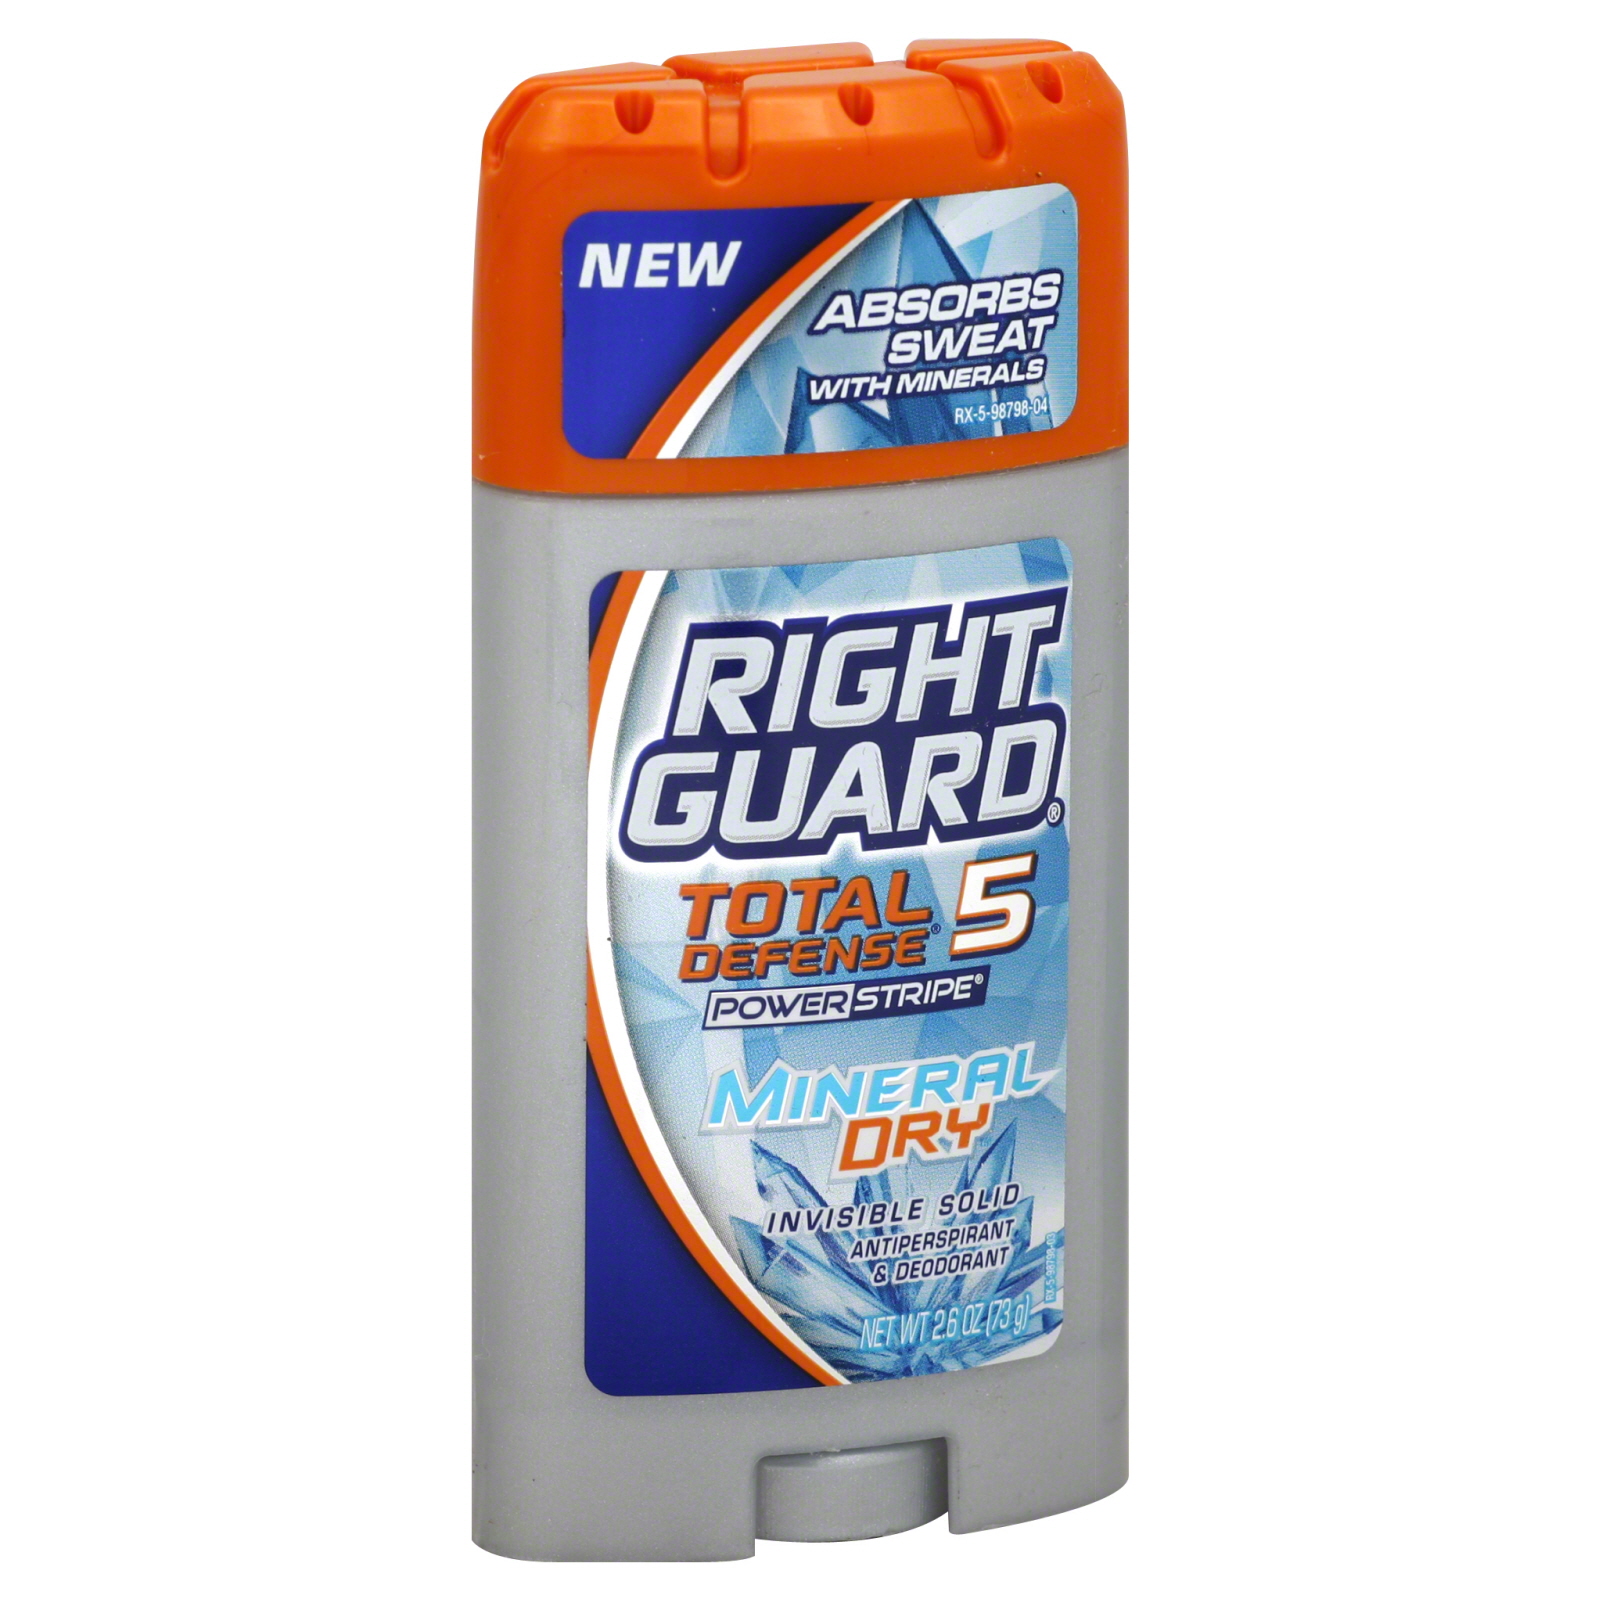 Right Guard Total Defense 5 Power Stripe Mineral Dry Invisible Solid 2.6 oz Stick